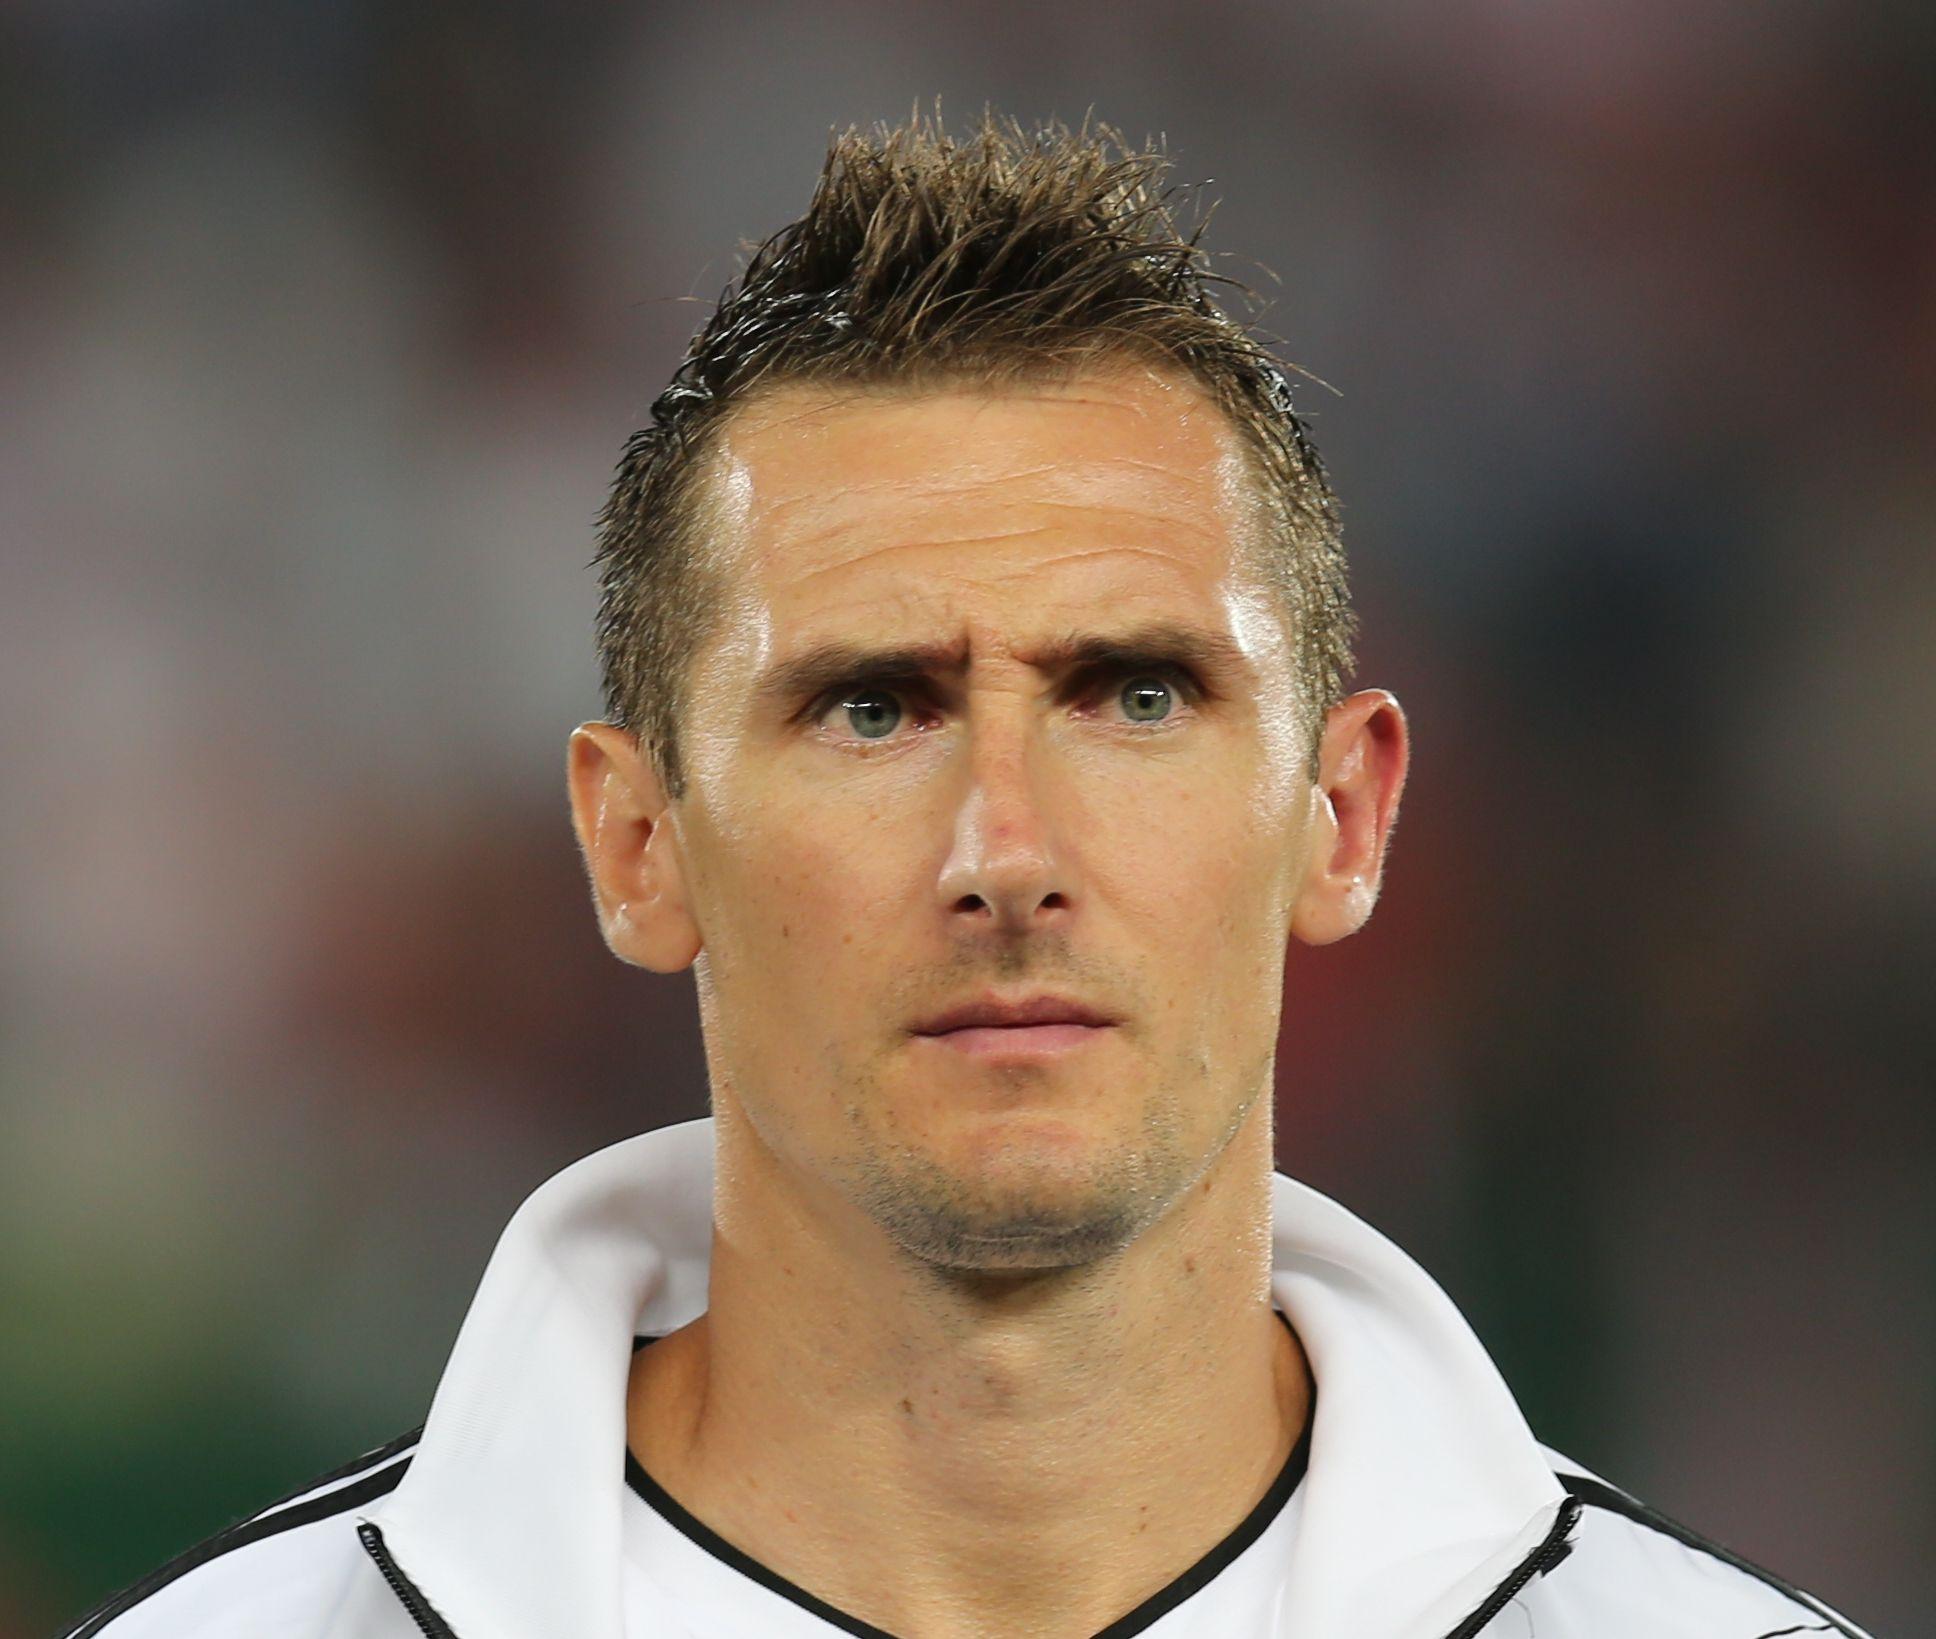 Miroslav Klose. Football / Soccer. Soccer players